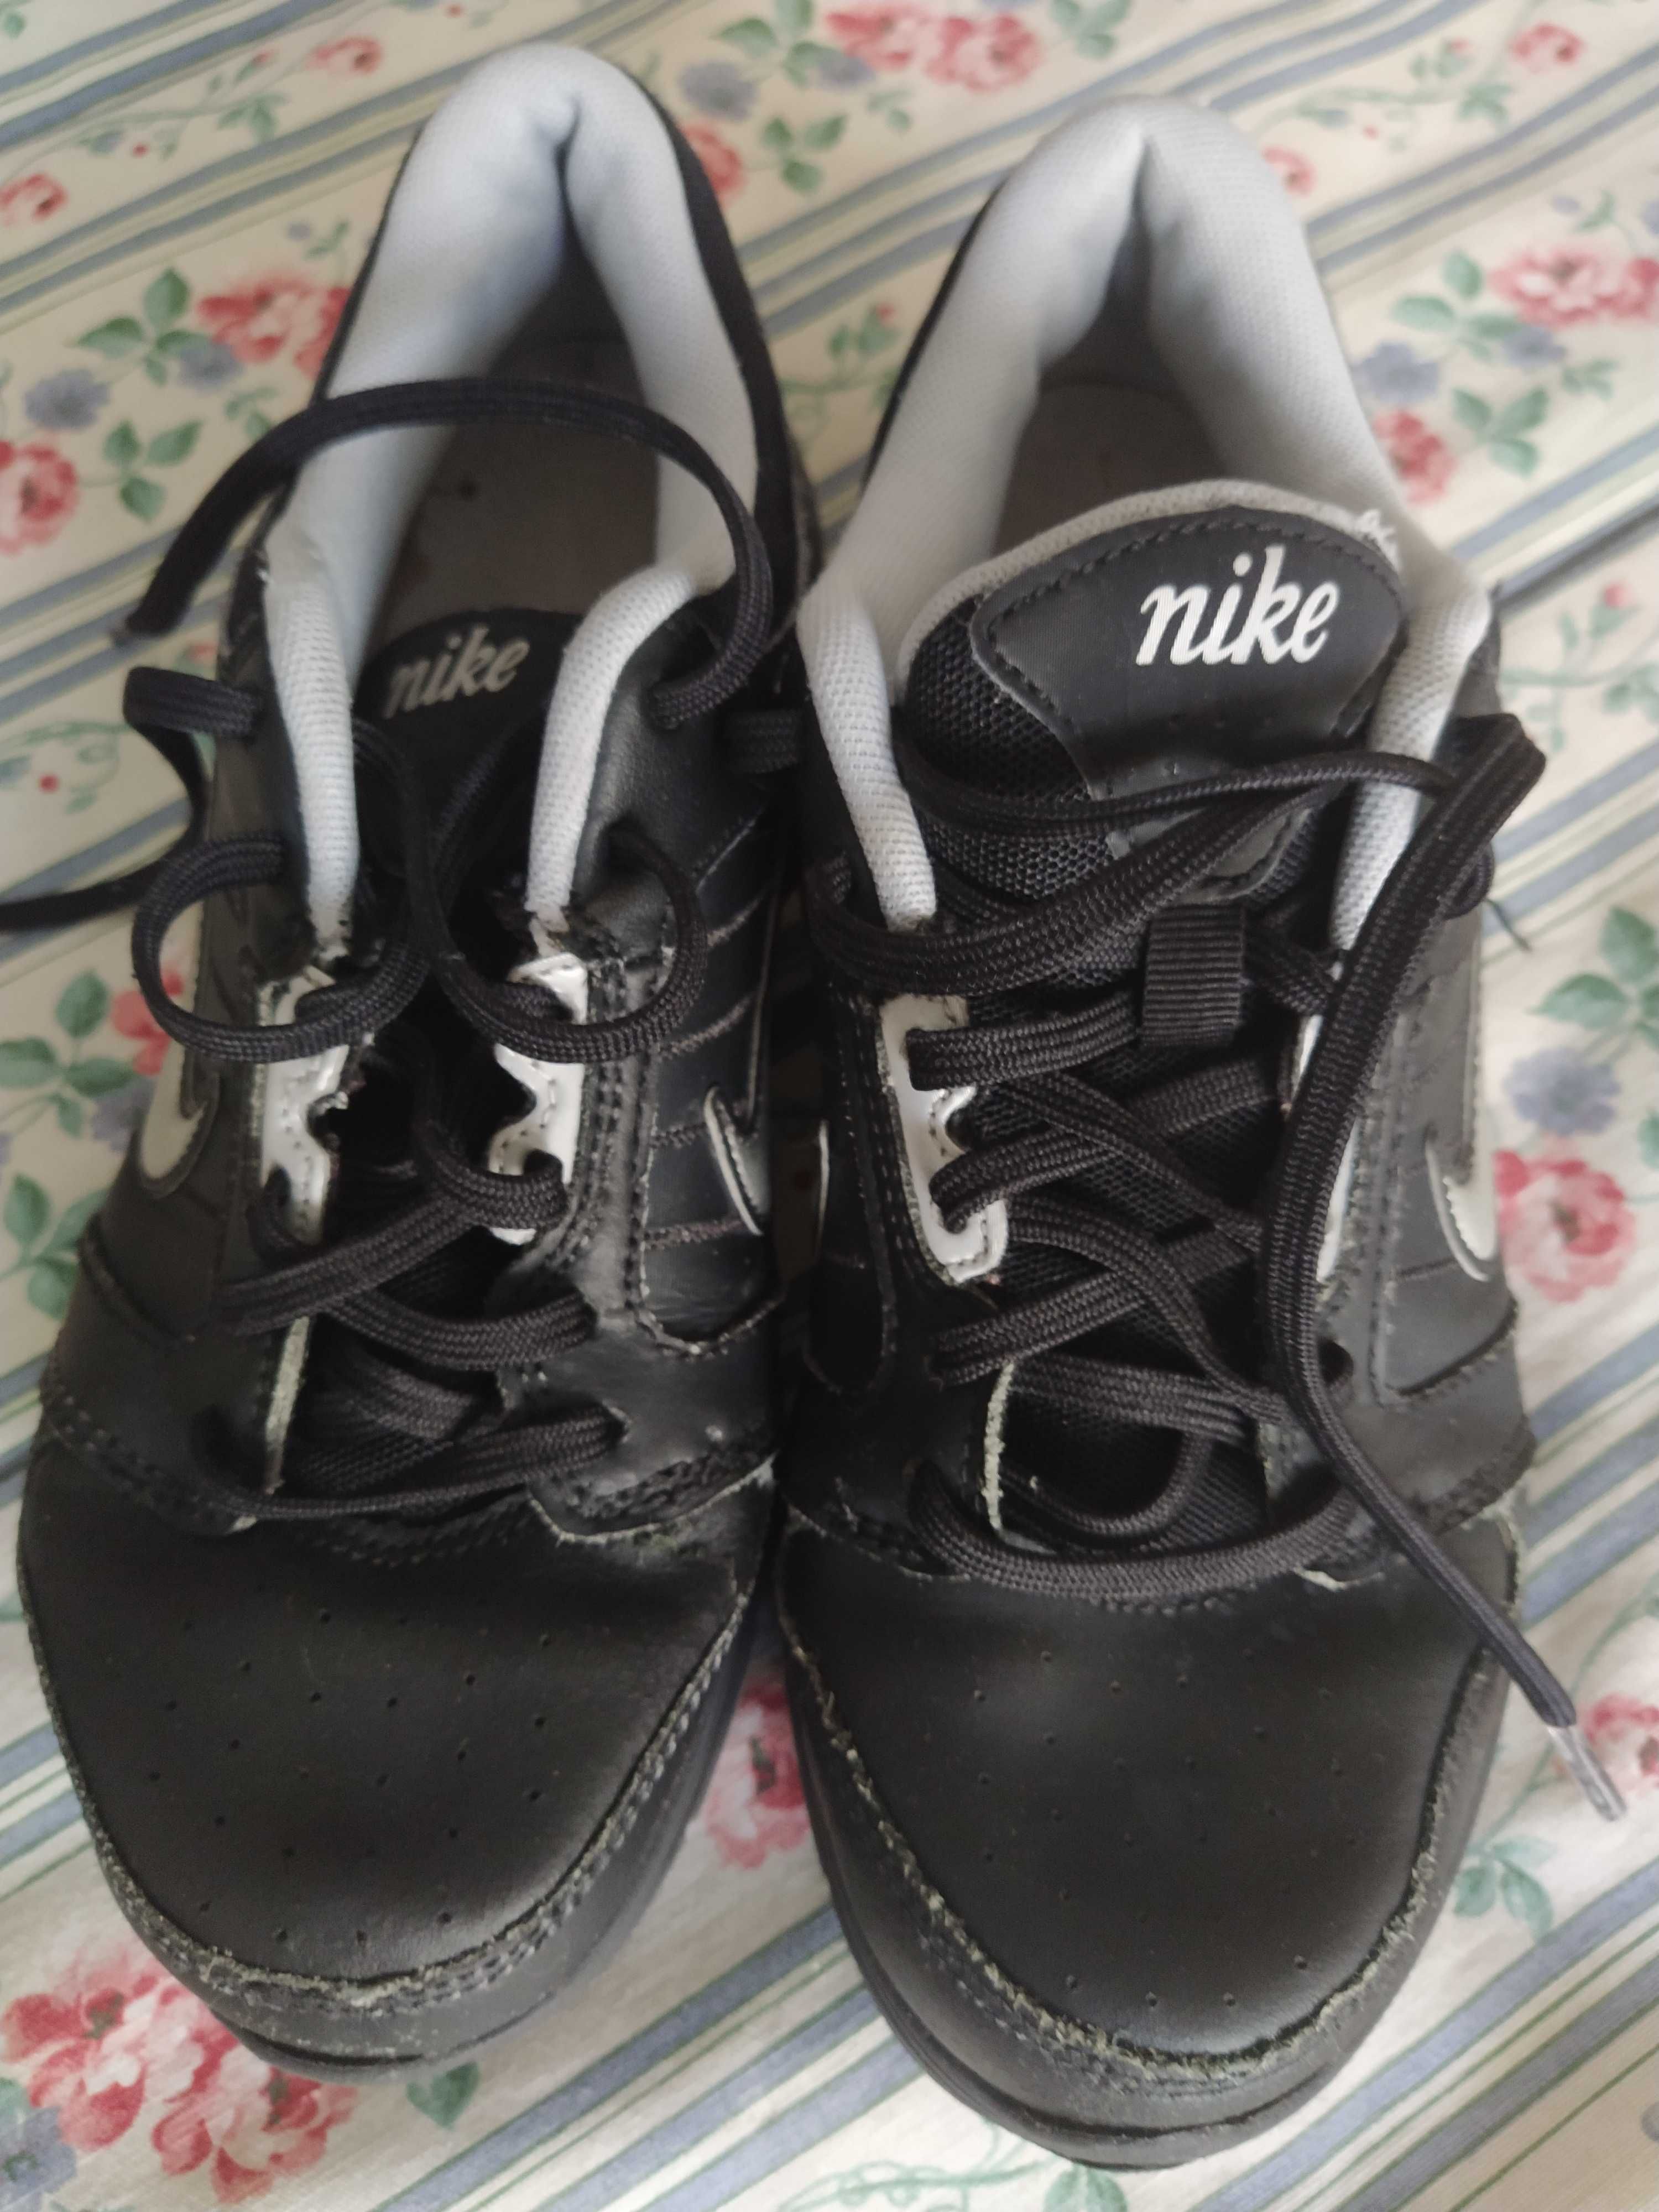 Ténis preto e cinza Nike nº 35,5